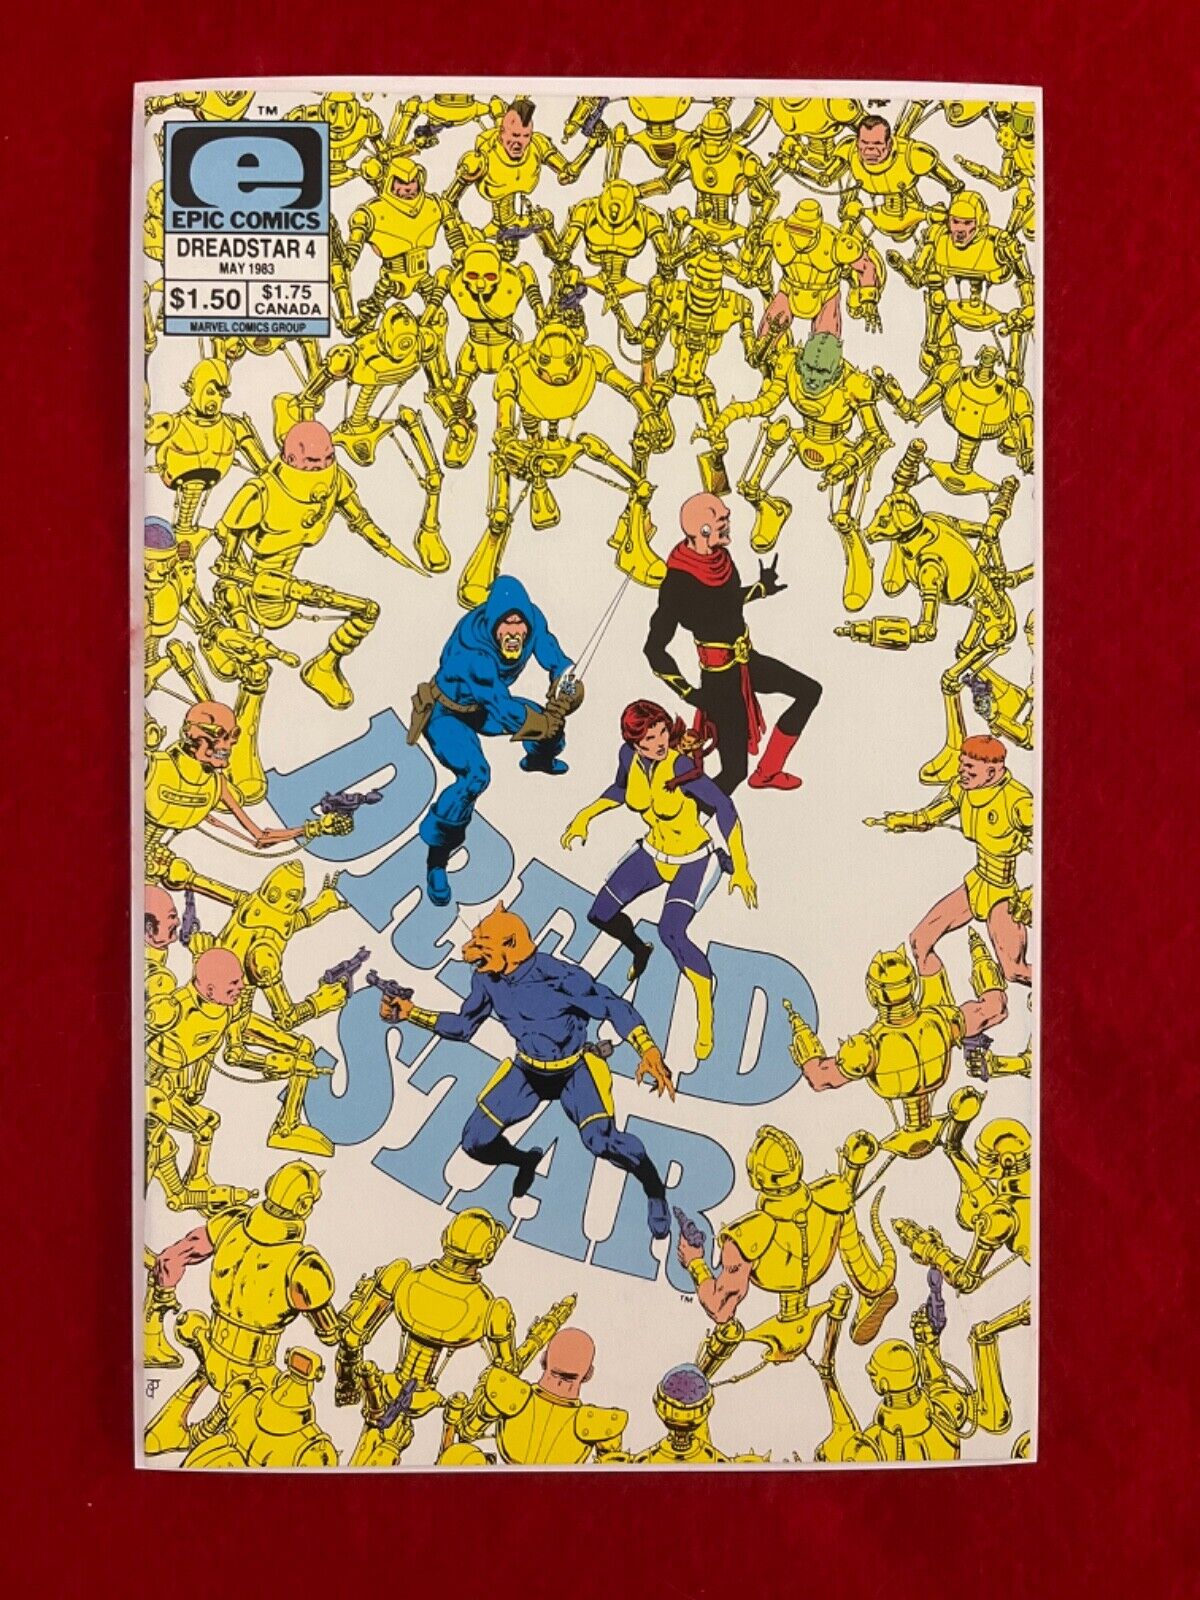 Epic Comics Dreadstar Vol 1. #4 May 1983 (VF-NM)